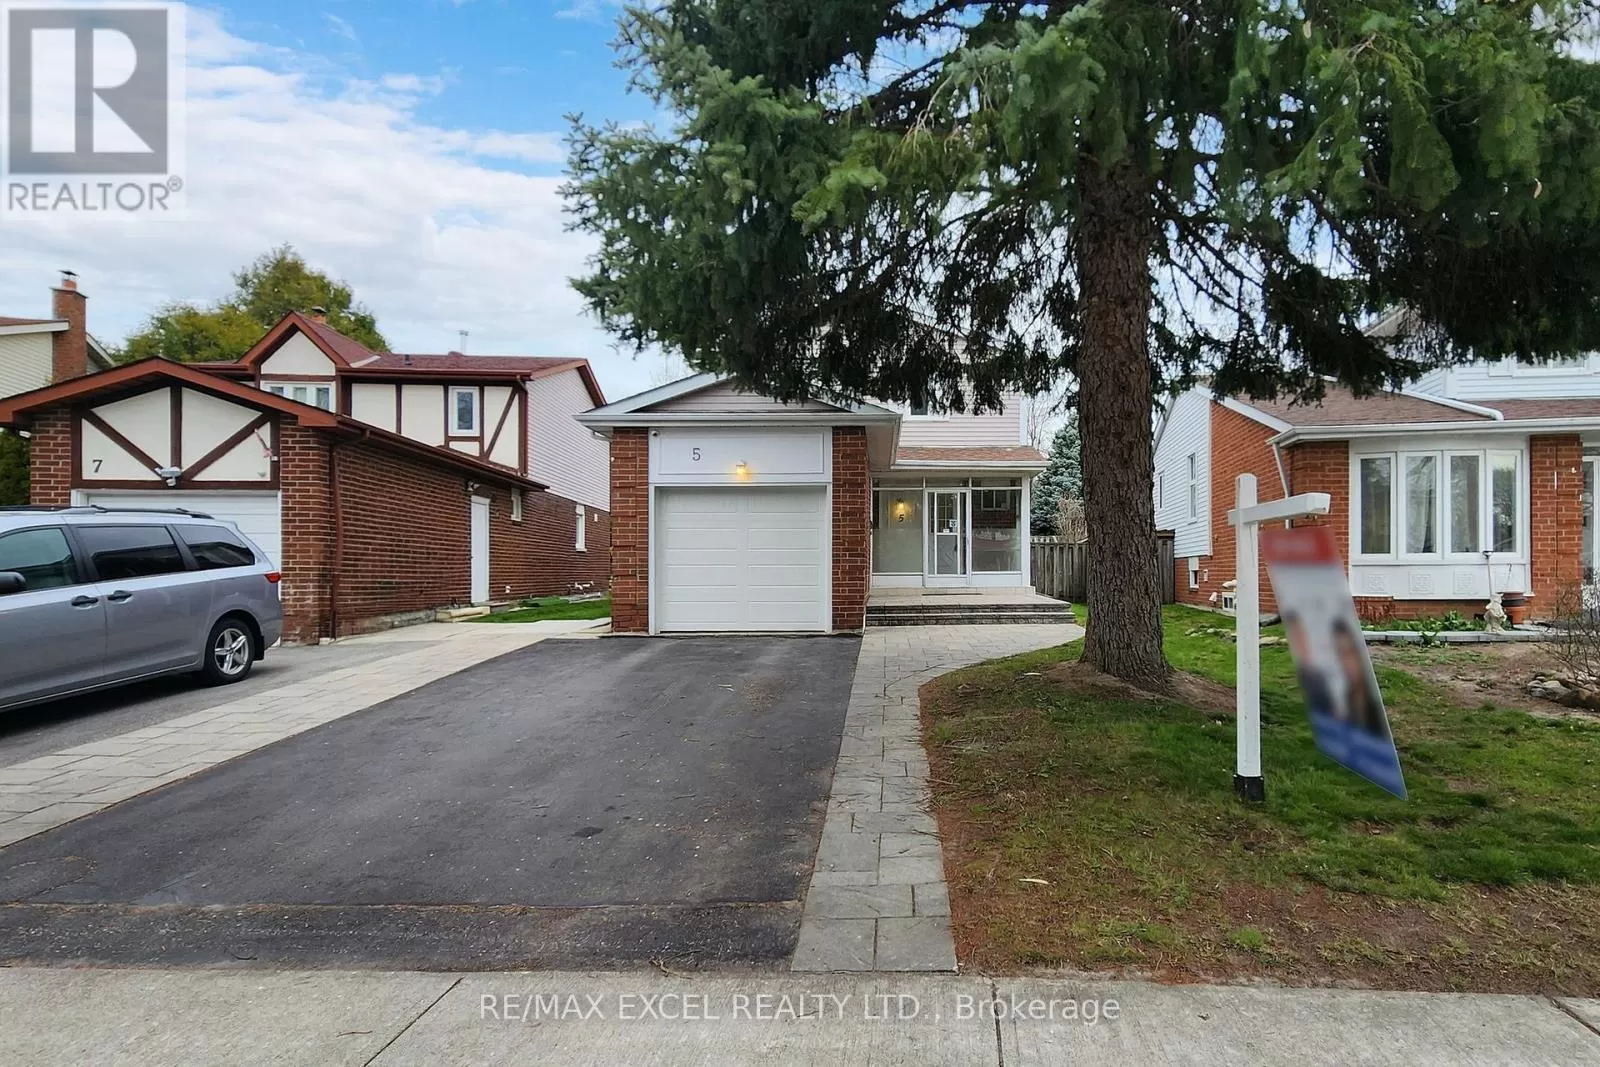 House for rent: 5 Oakhaven Drive, Toronto, Ontario M1V 1X8